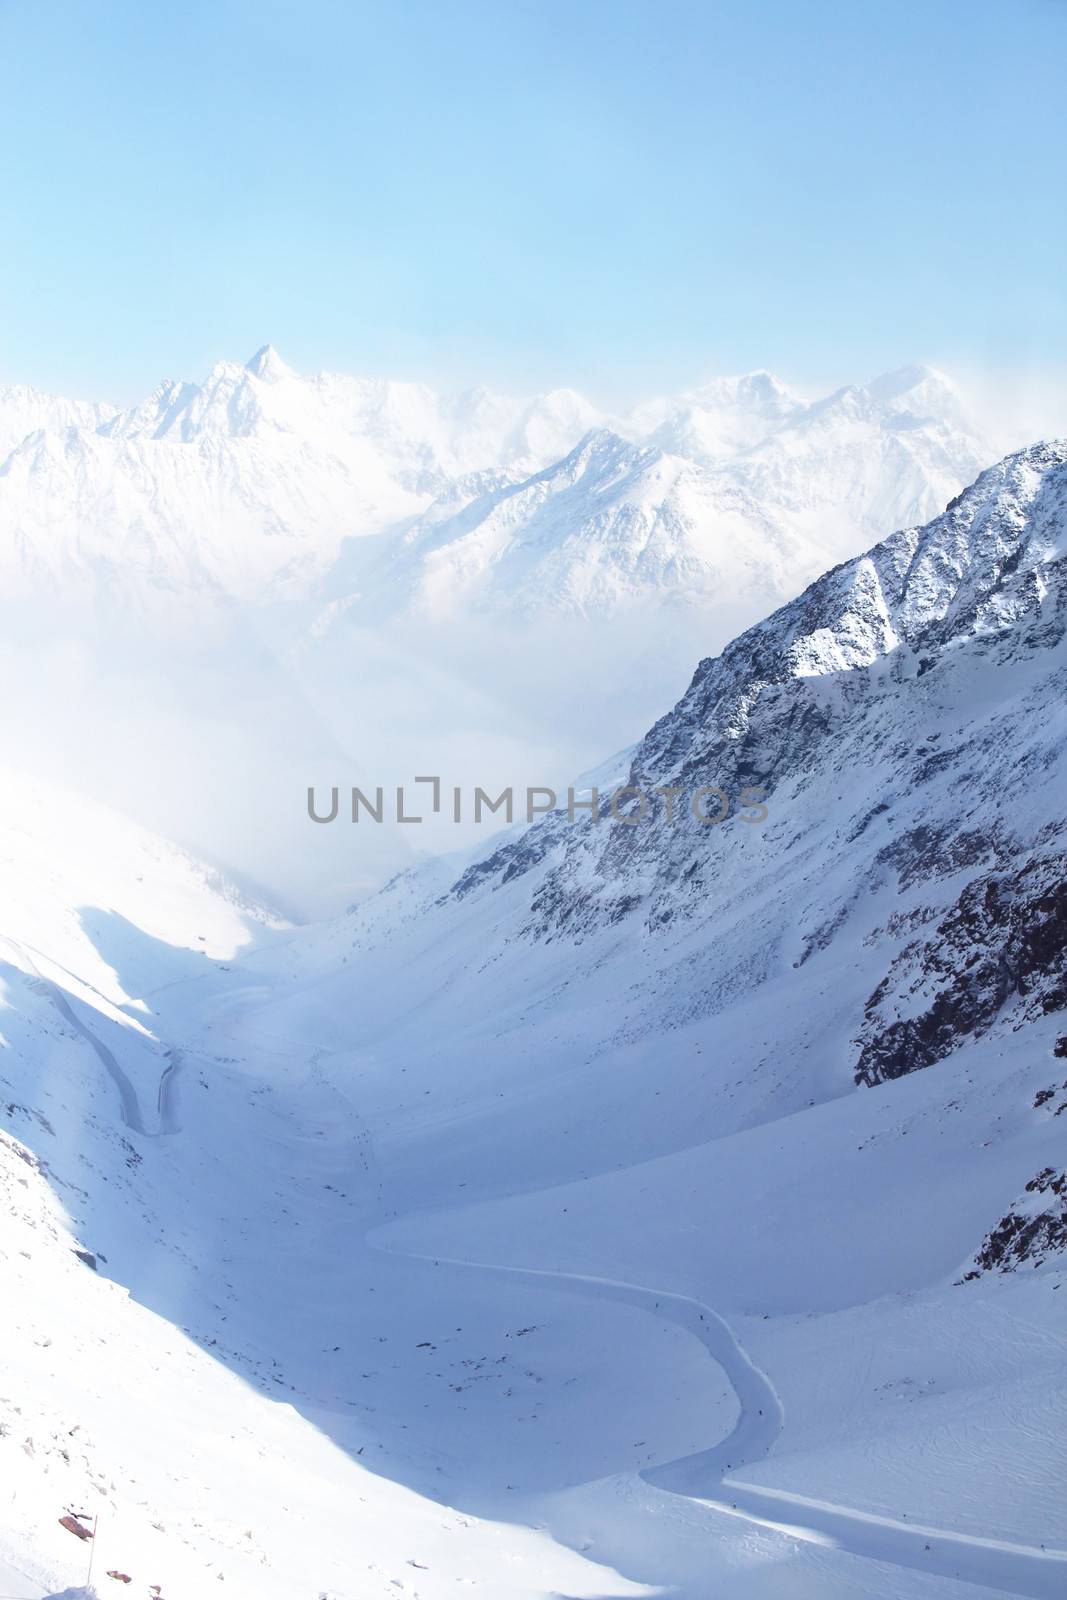 Mountain peaks of winter alps under blue sky